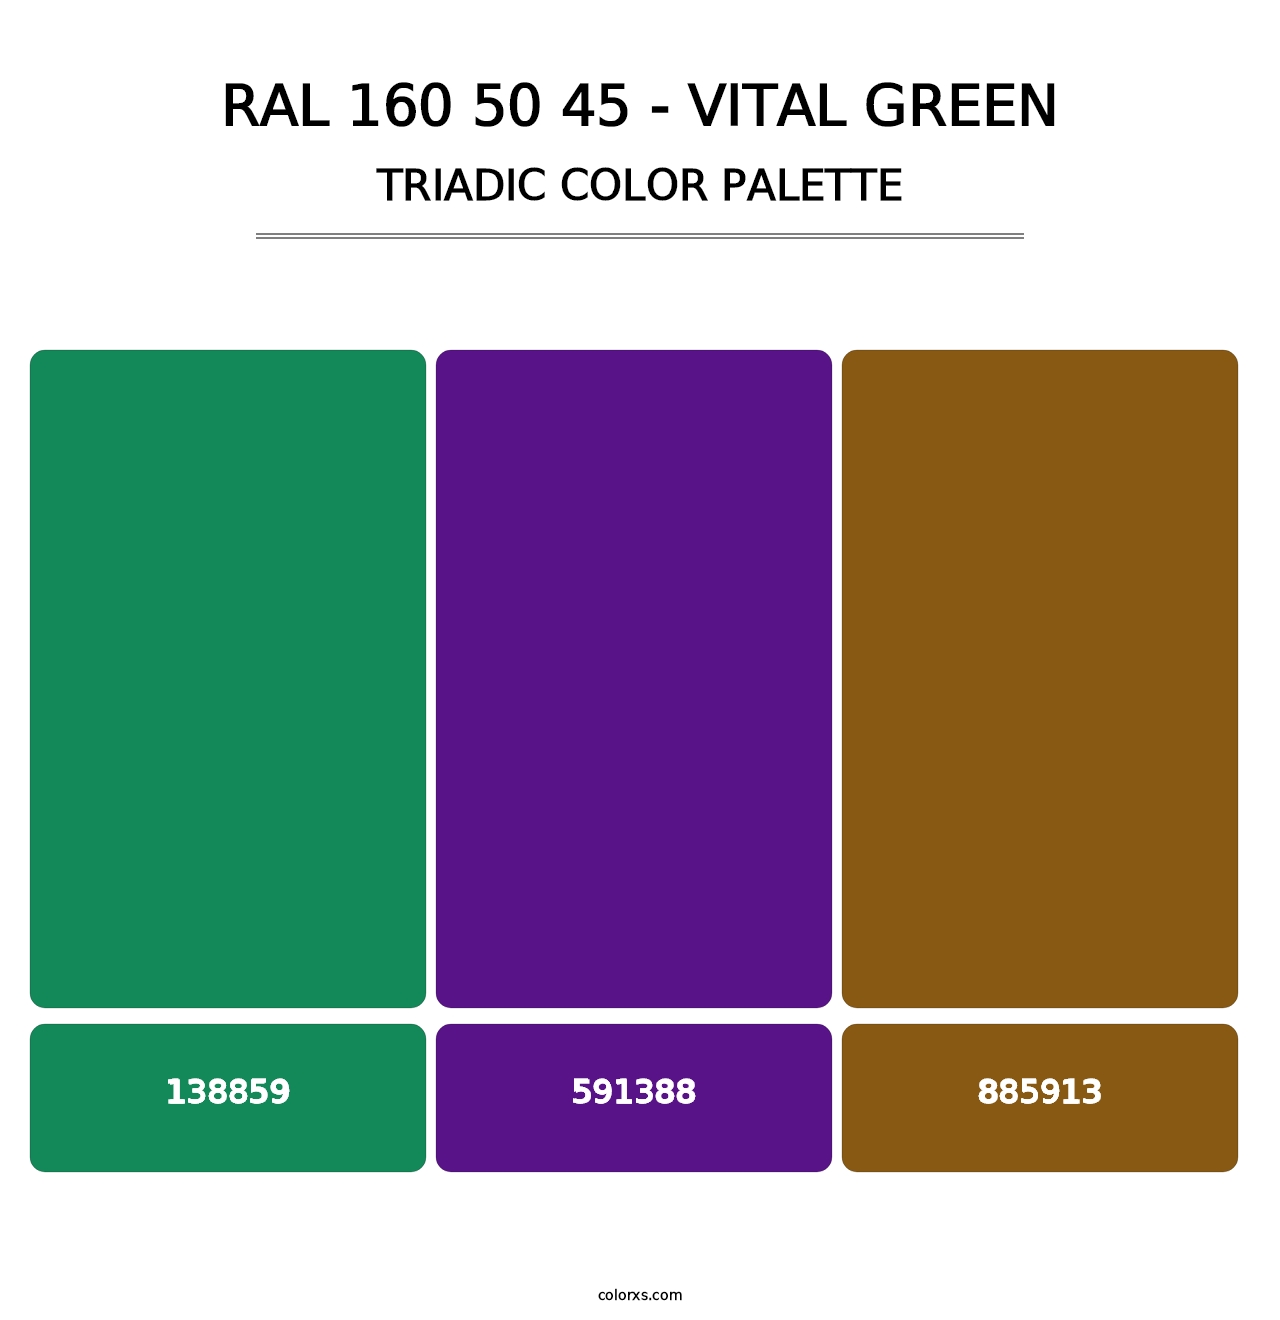 RAL 160 50 45 - Vital Green - Triadic Color Palette